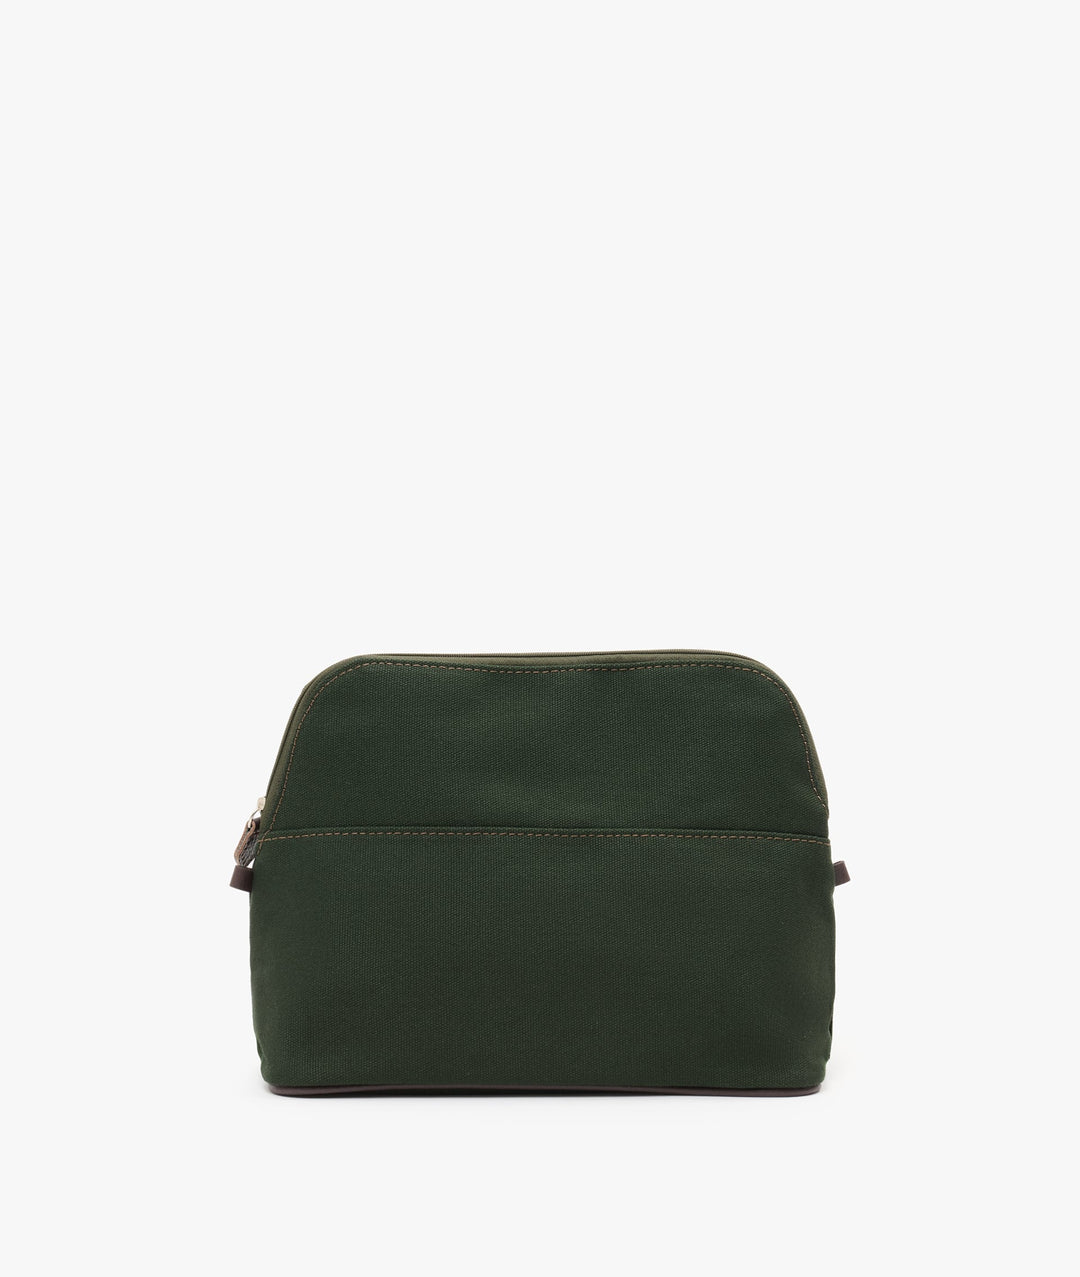 MyStyleBags Cosmetic & Toiletry Bags My Style Bags Aspen Large Cosmetic Bag Dark Green Brand